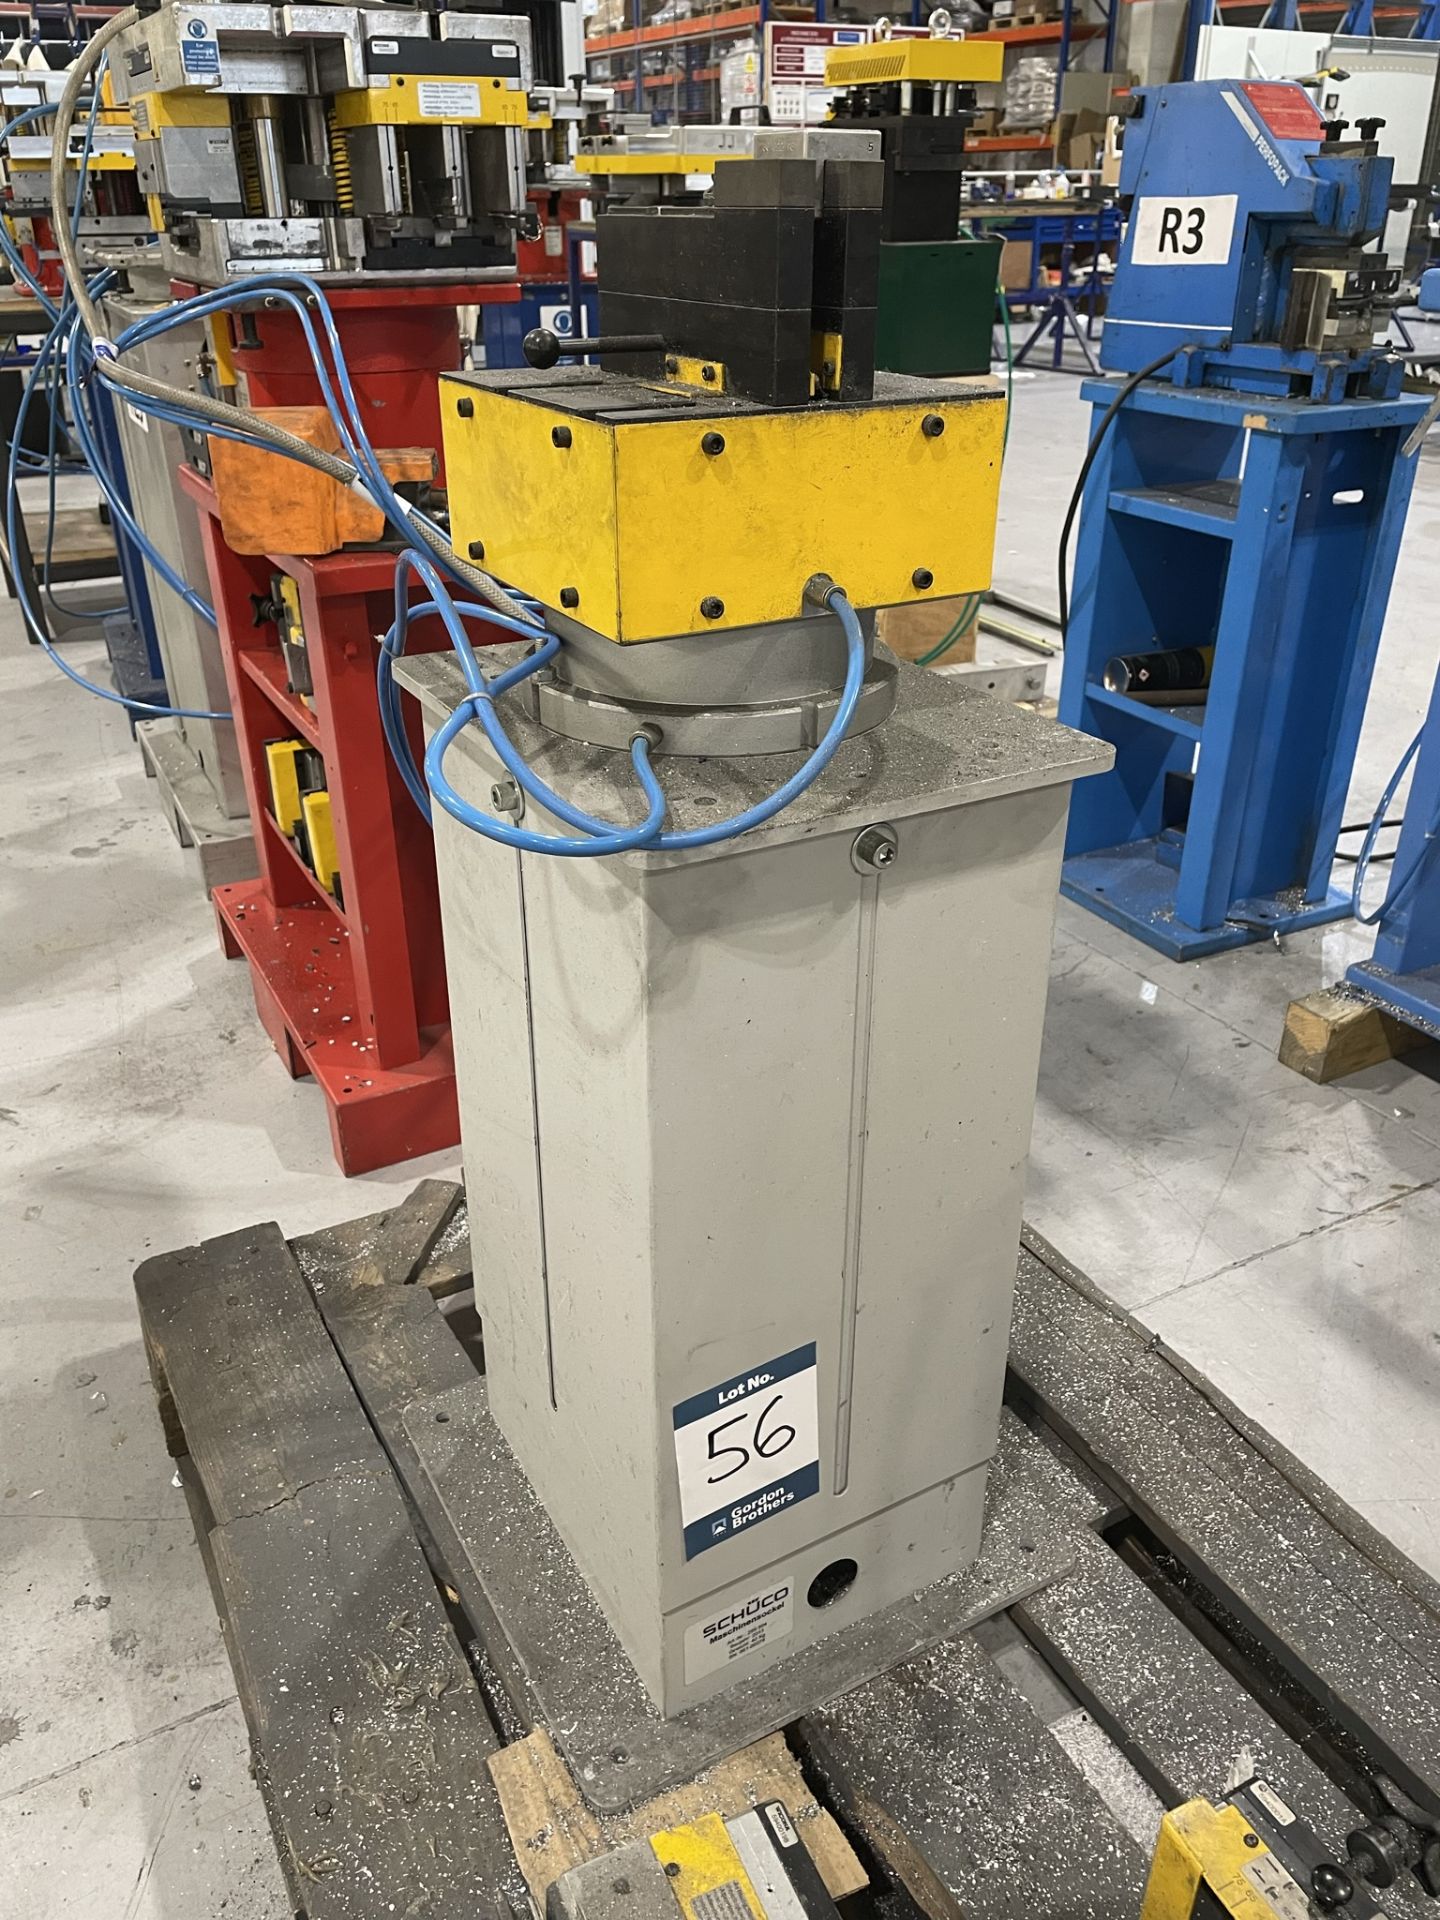 Schuco, 299-504 pneumatic press, Serial No. 661-00378 (DOM: 2013) with Wicona 5940019B, 5940046